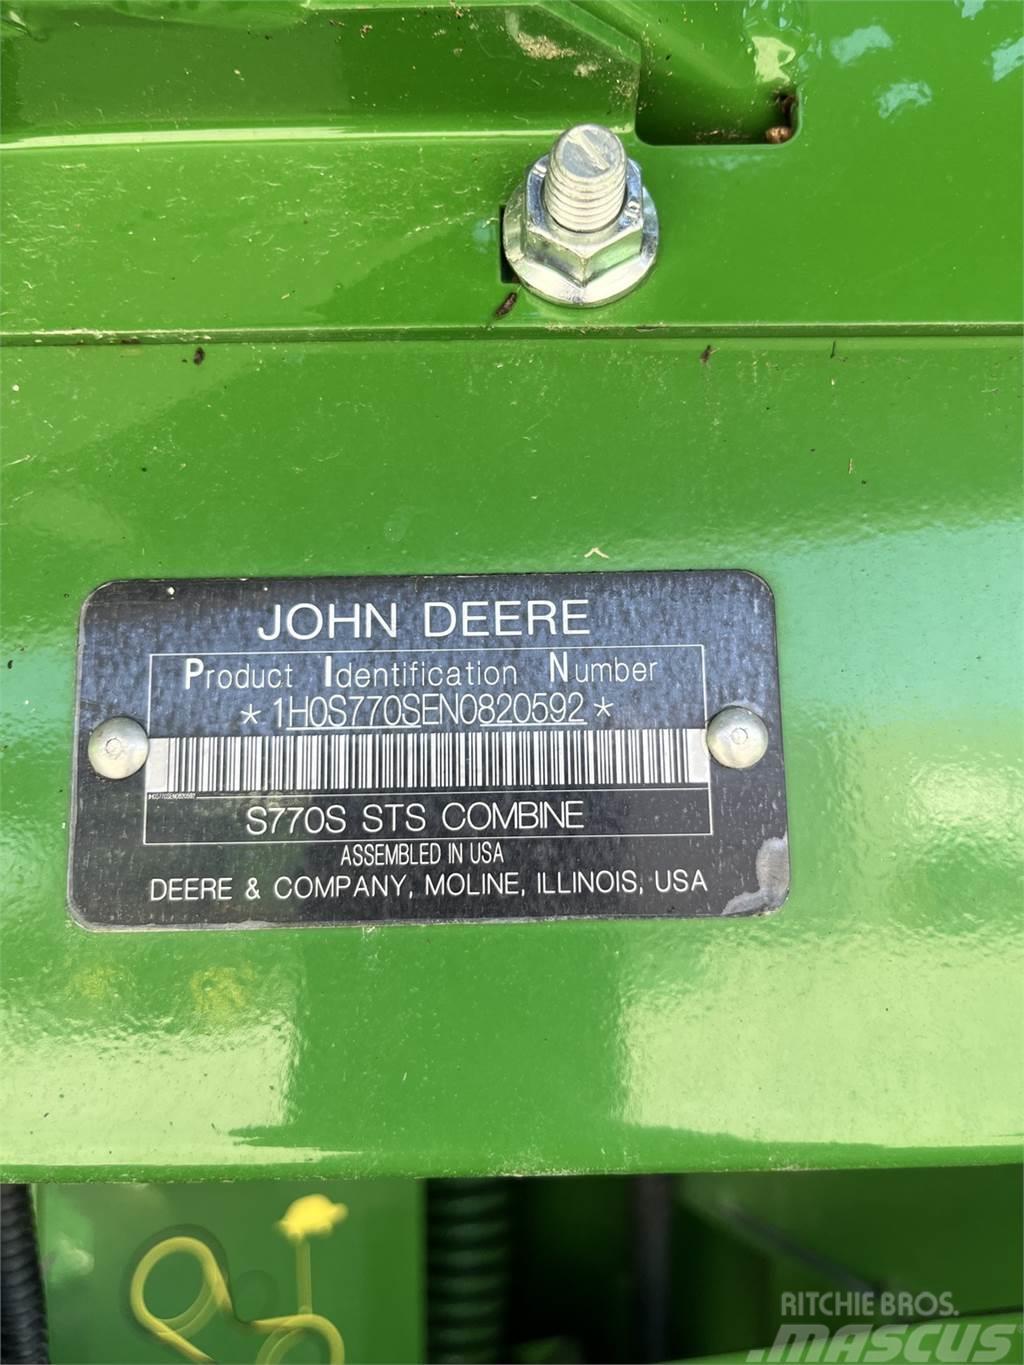 John Deere S770 Ceifeiras debulhadoras